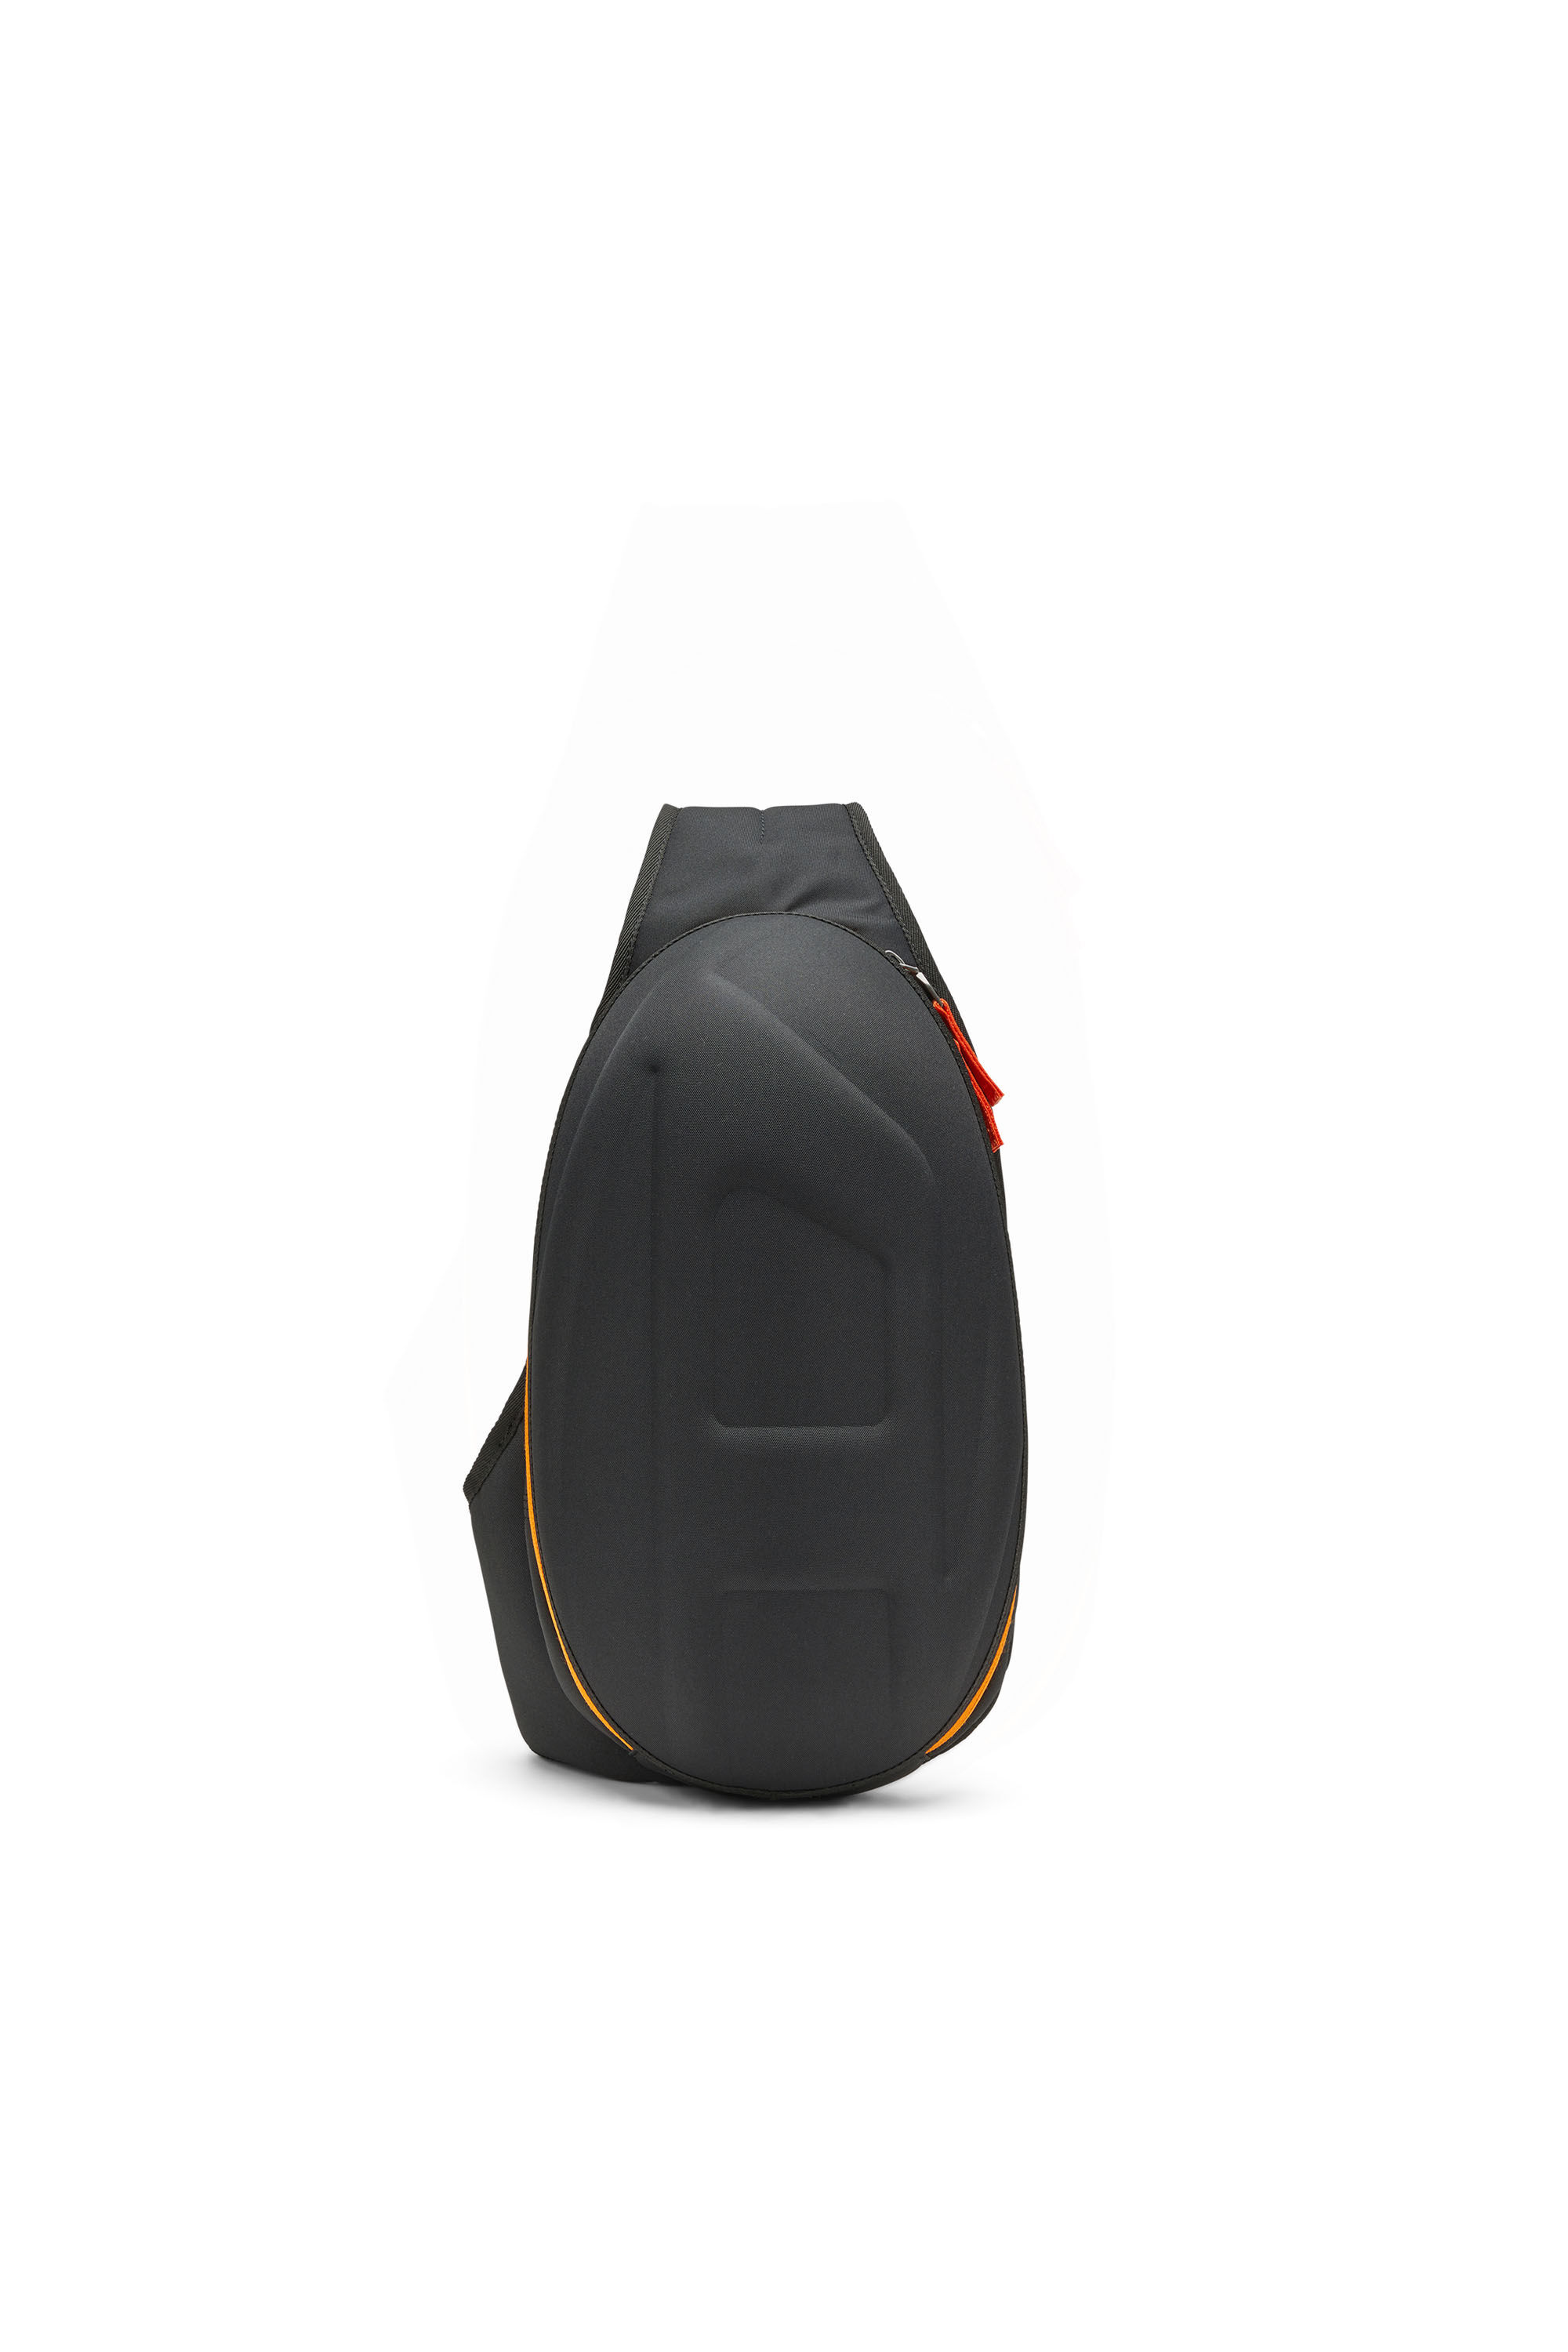 1DR-POD SLING BAG Man: Hard shell sling backpack | Diesel